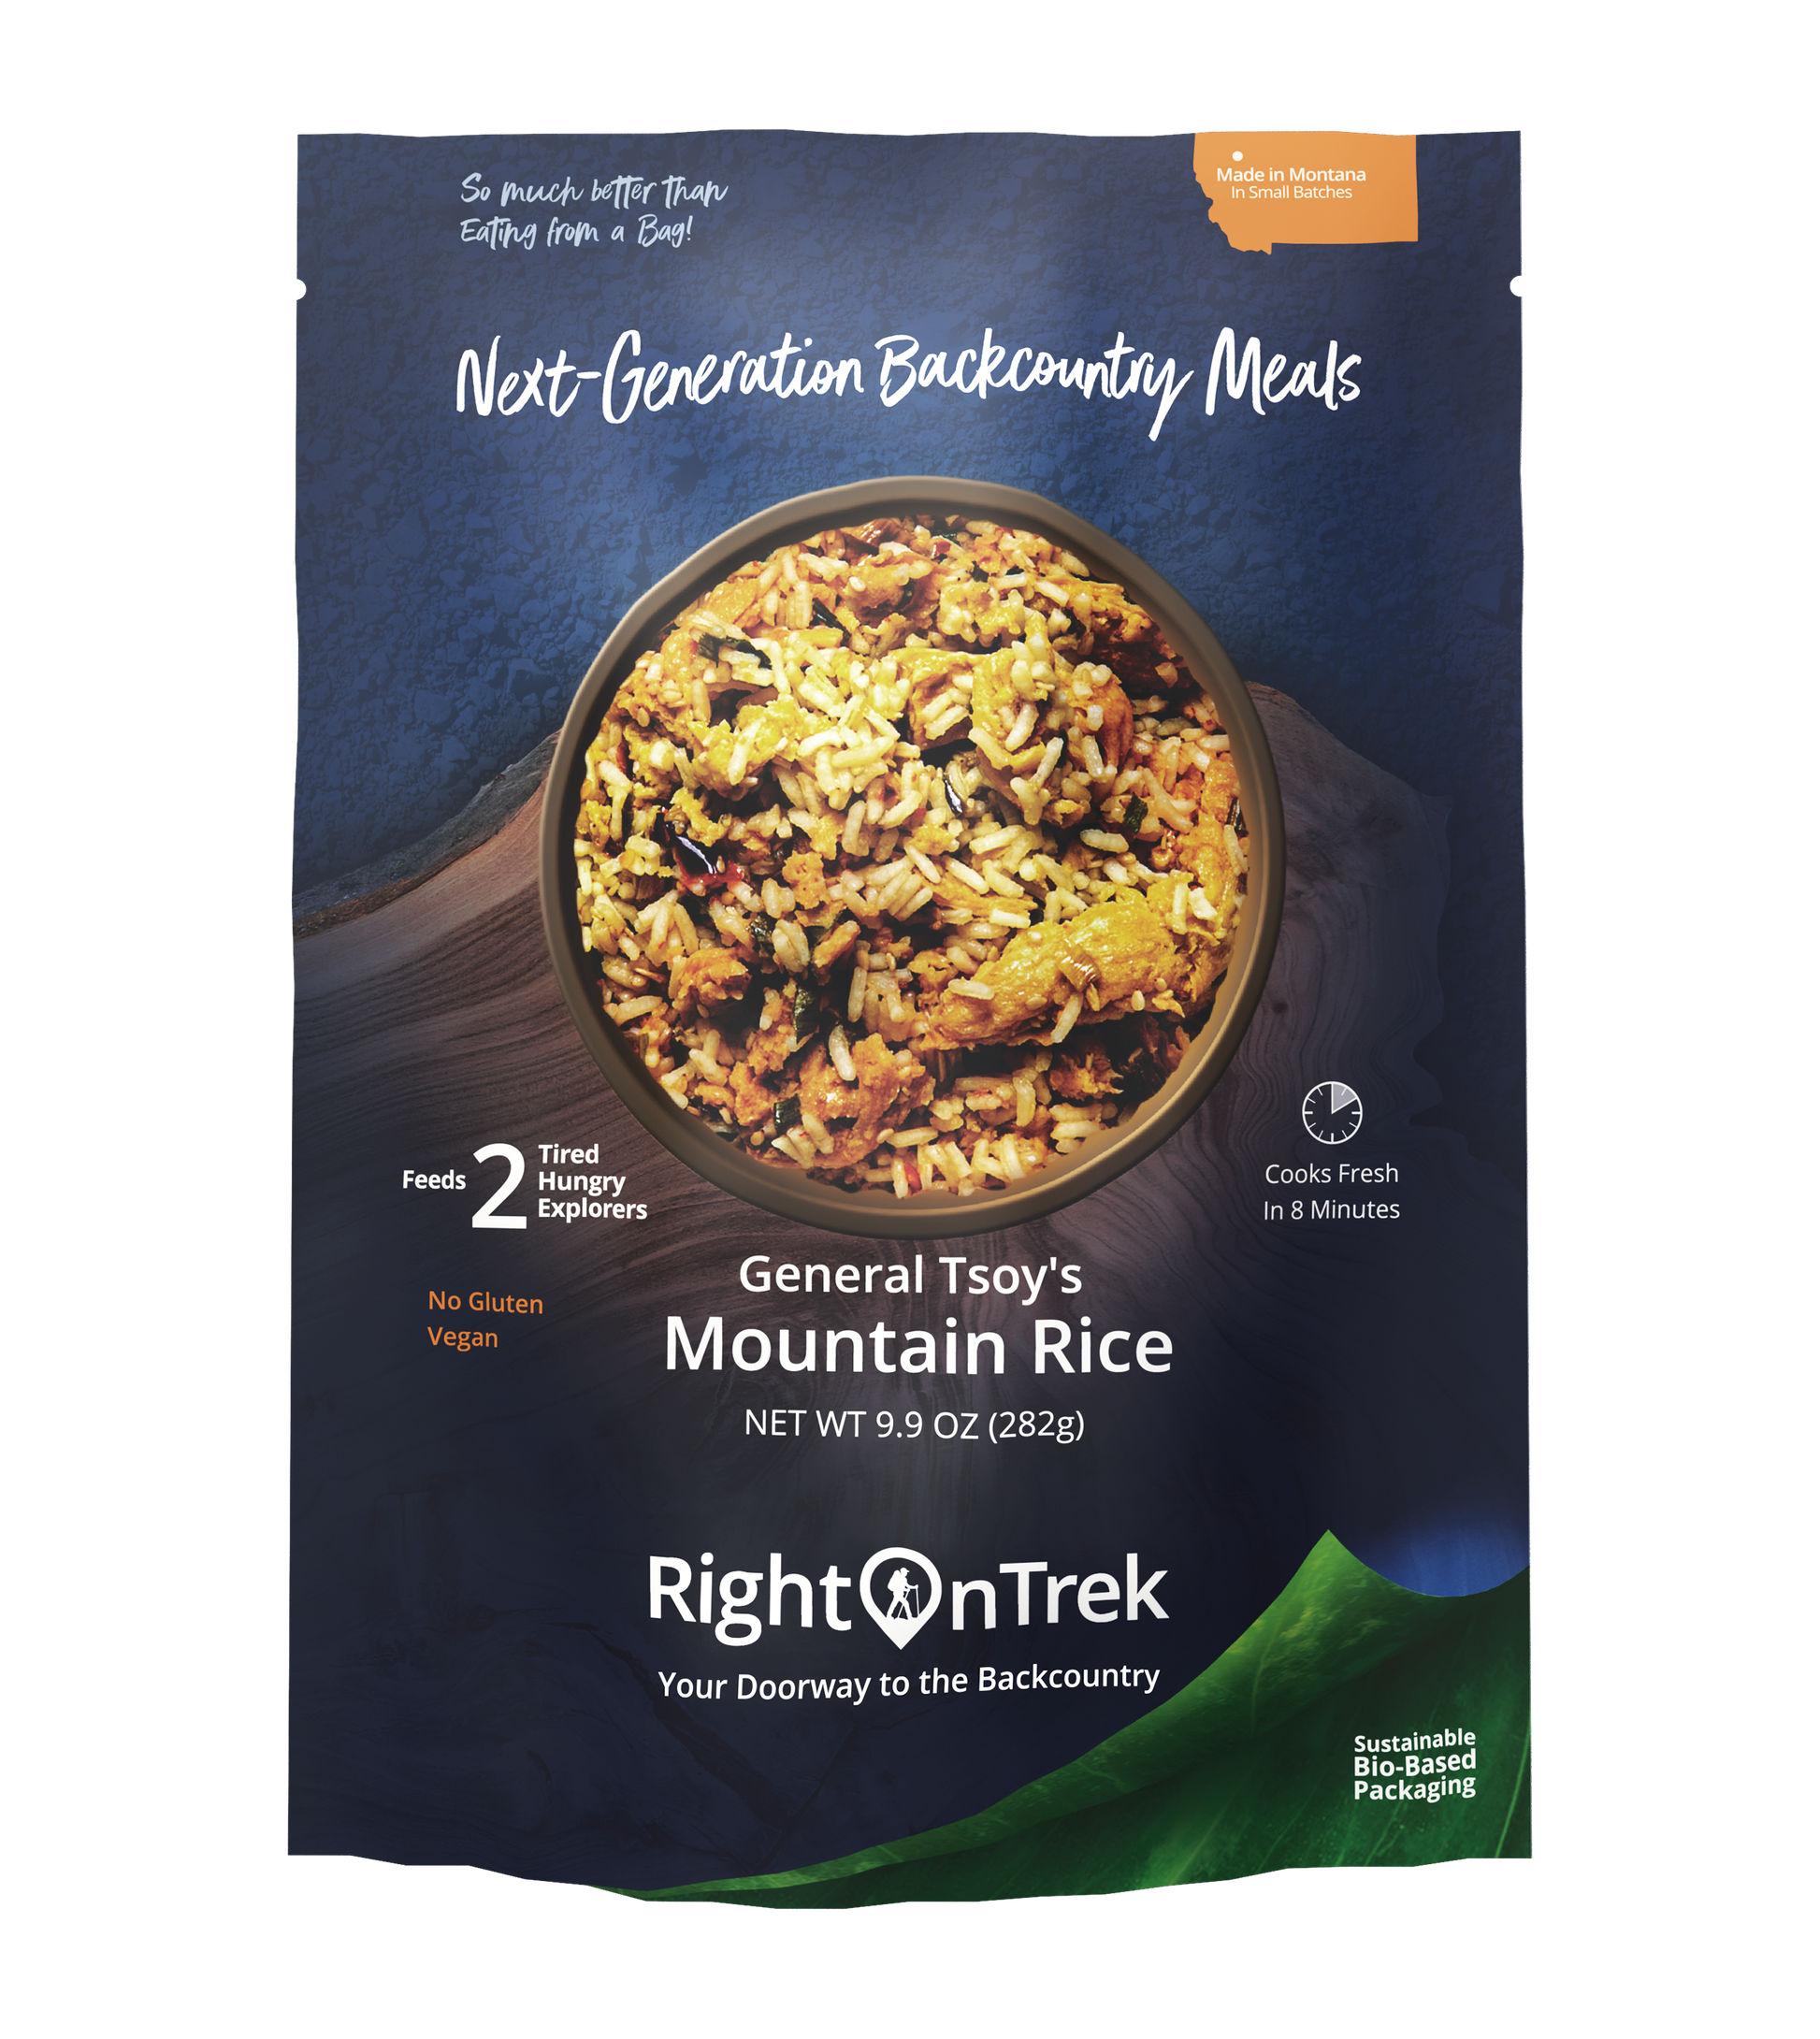 RightOnTrek general tsoy's mountain rice feeds 2 people